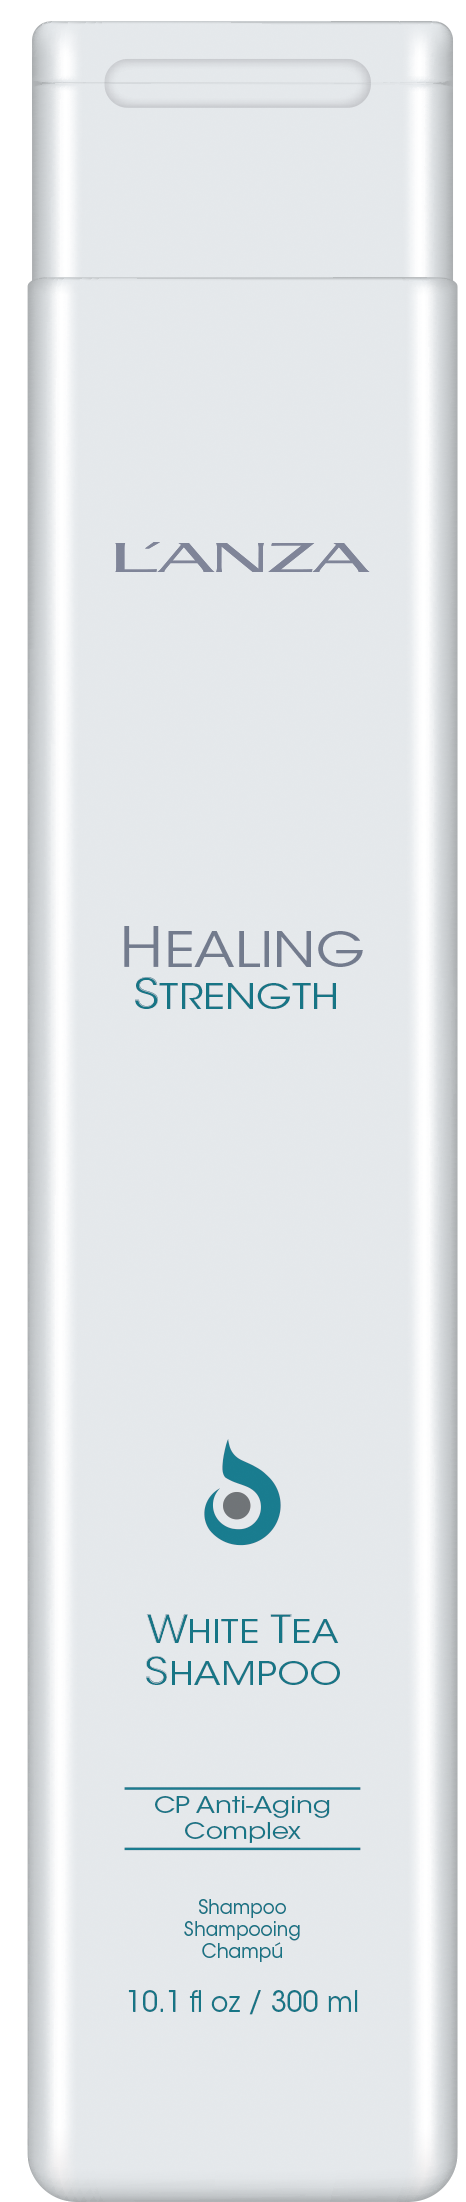 L'ANZA Healing Strength Shampoo